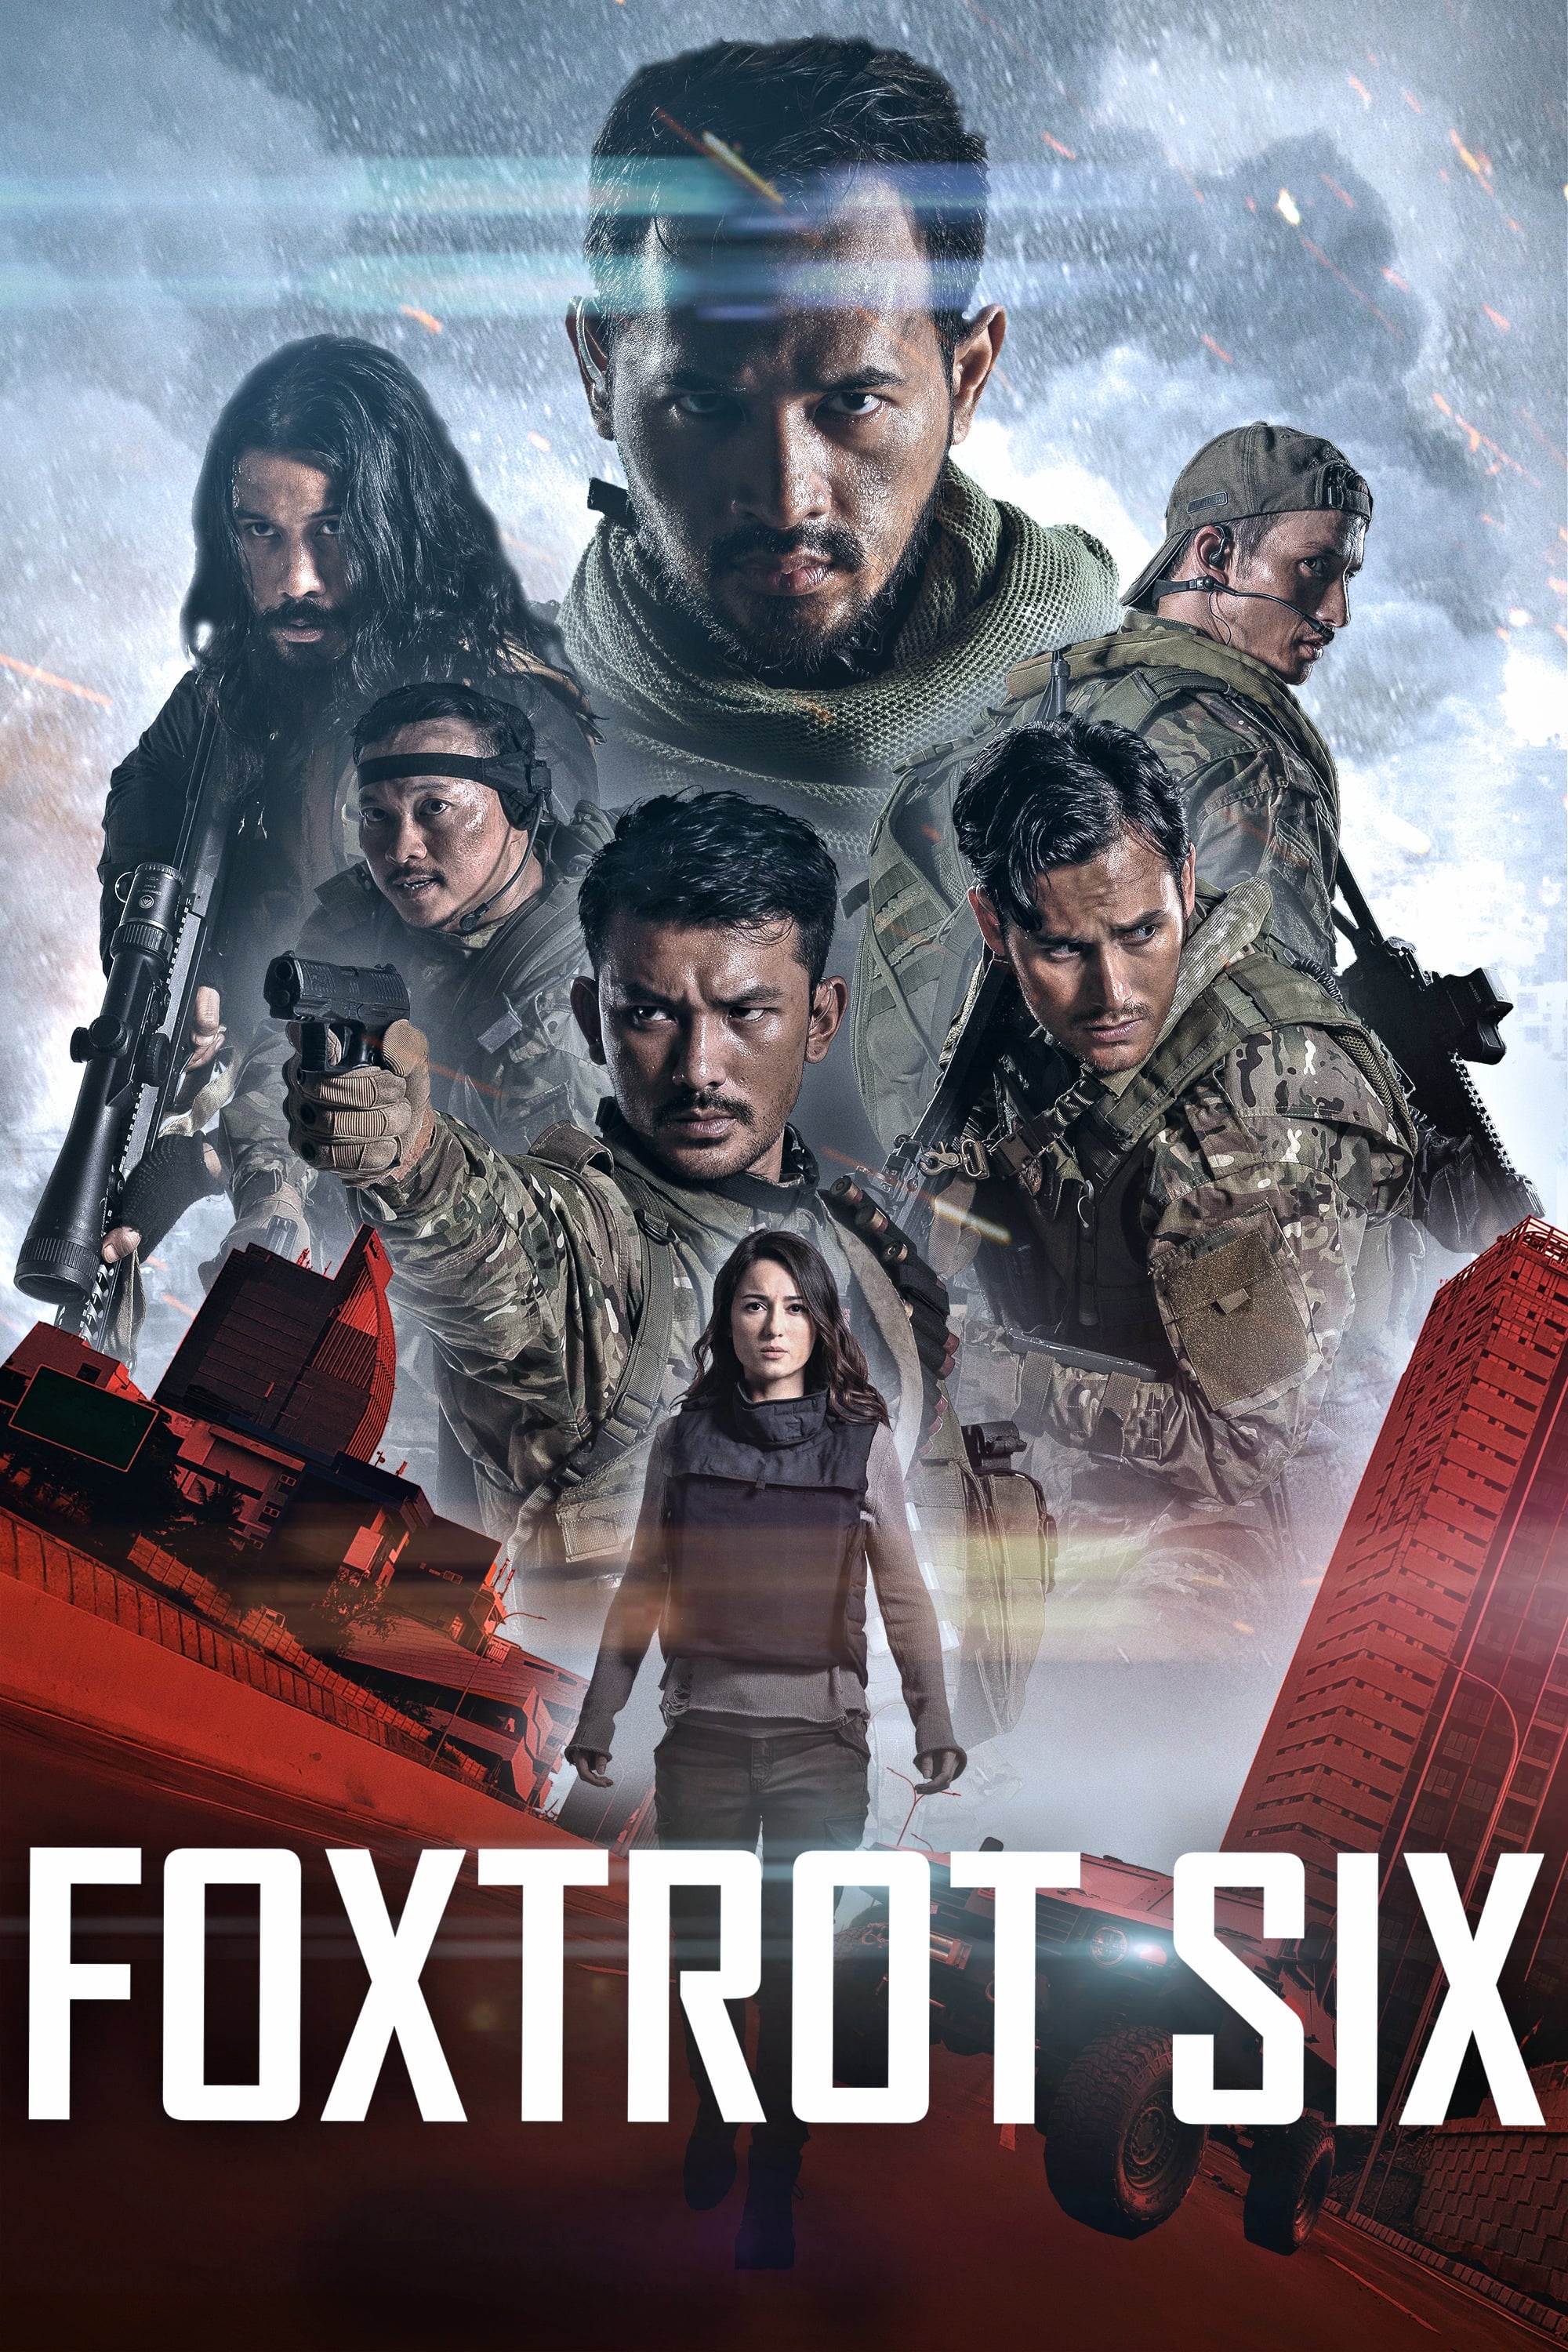 Sáu Chiến Binh - Foxtrot Six (2019)